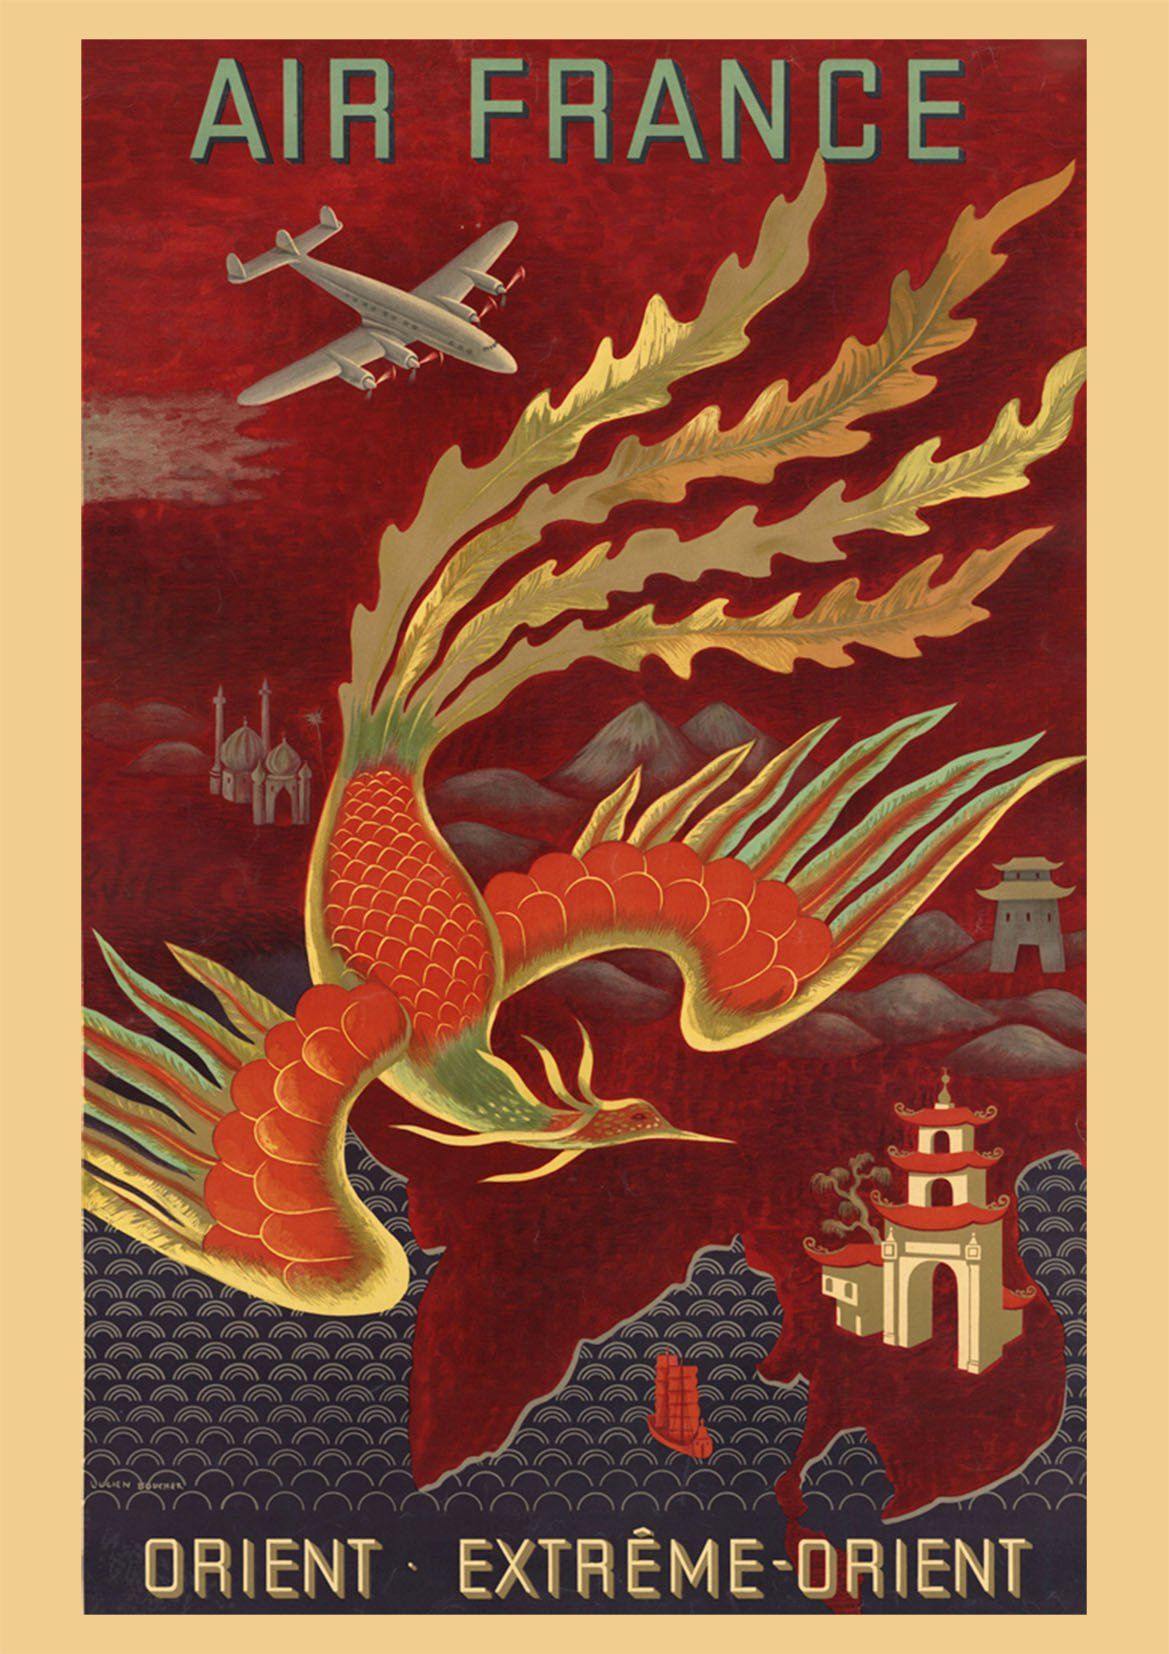 FAR EAST POSTER: Vintage Travel Advert Dragon Art Print - Pimlico Prints